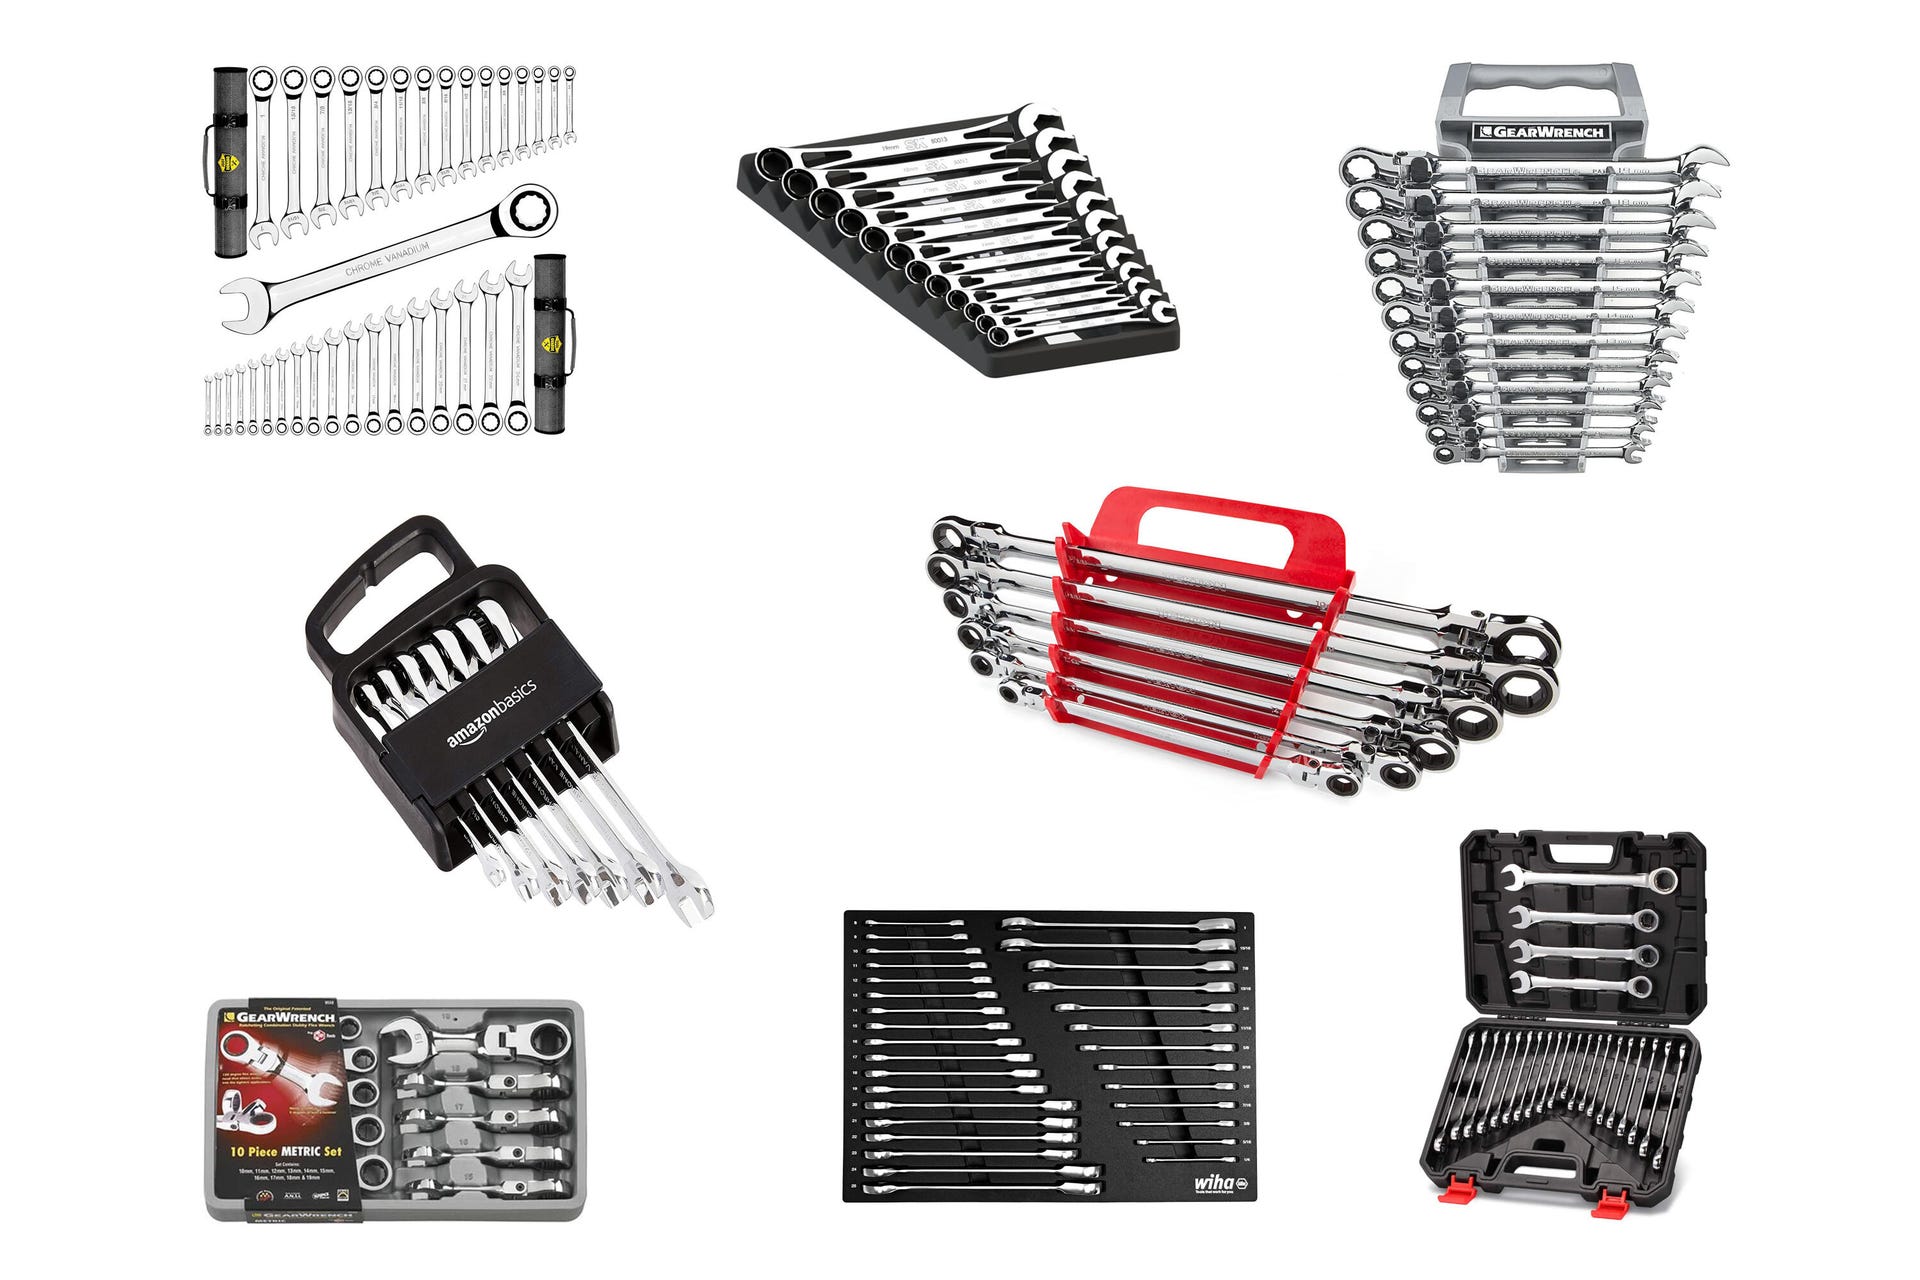 Best Ratcheting Wrench Set Promo Image - tools